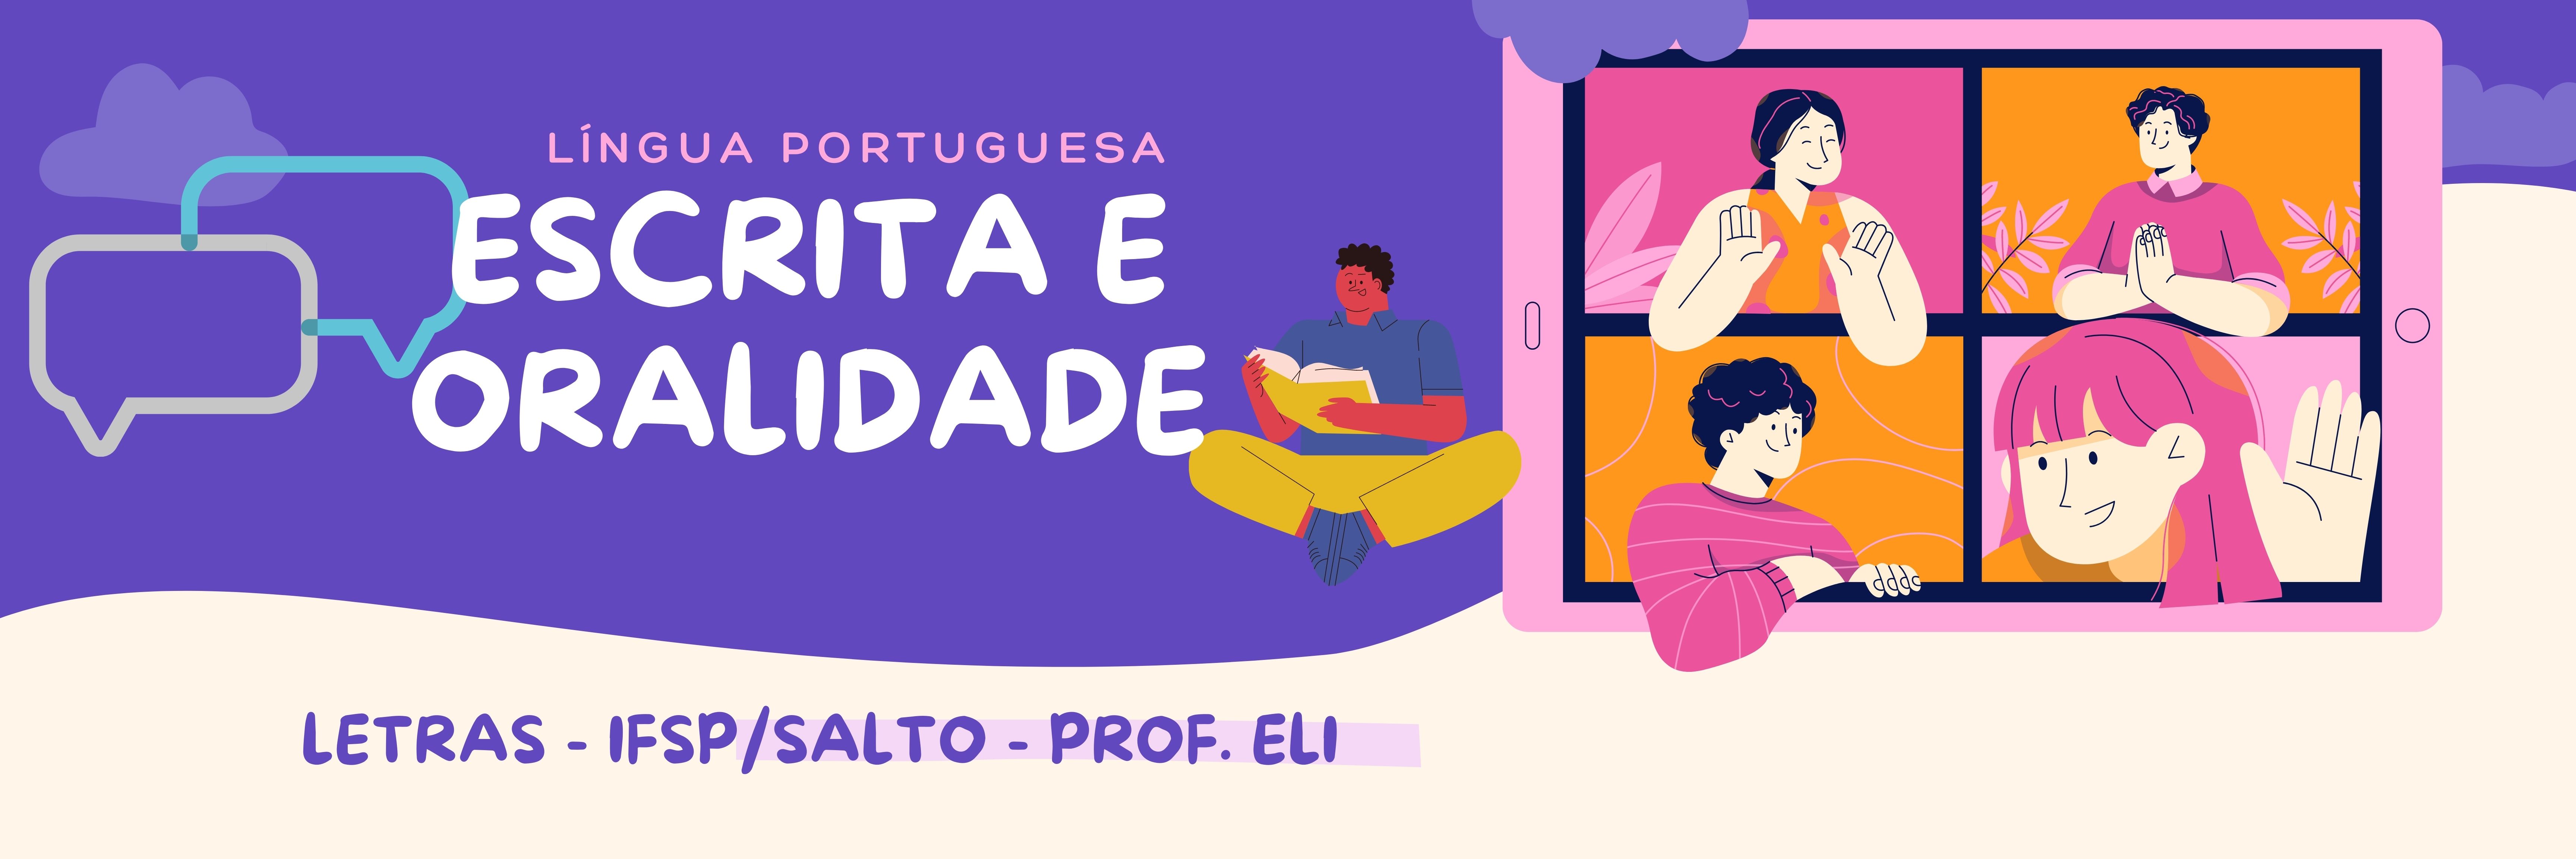 Língua Portuguesa: Escrita e Oralidade - turma 02/21